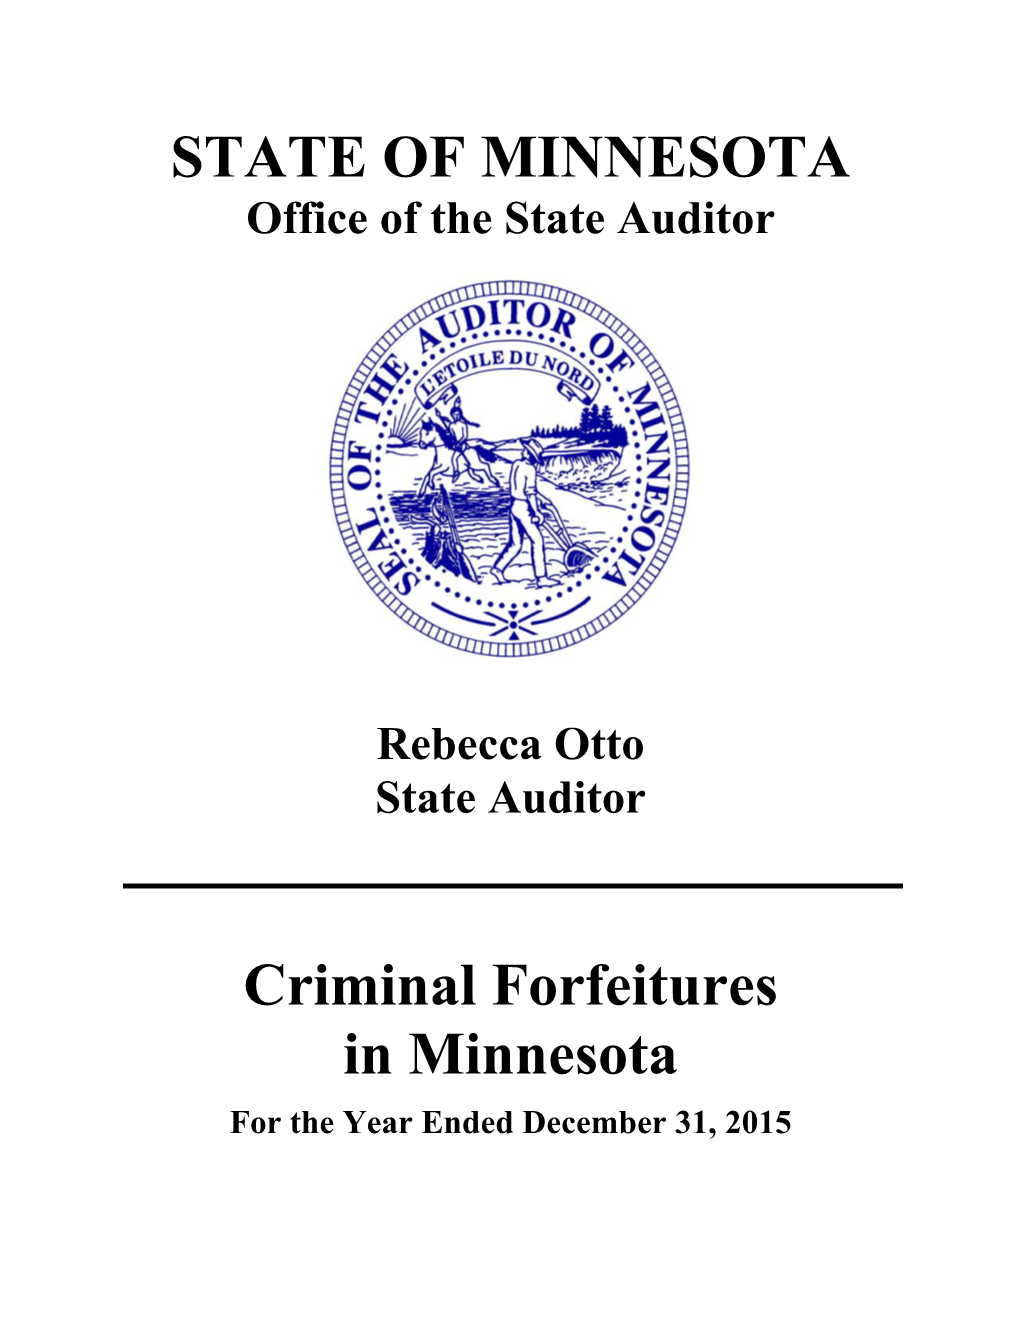 2015 Criminal Forfeitures in Minnesota